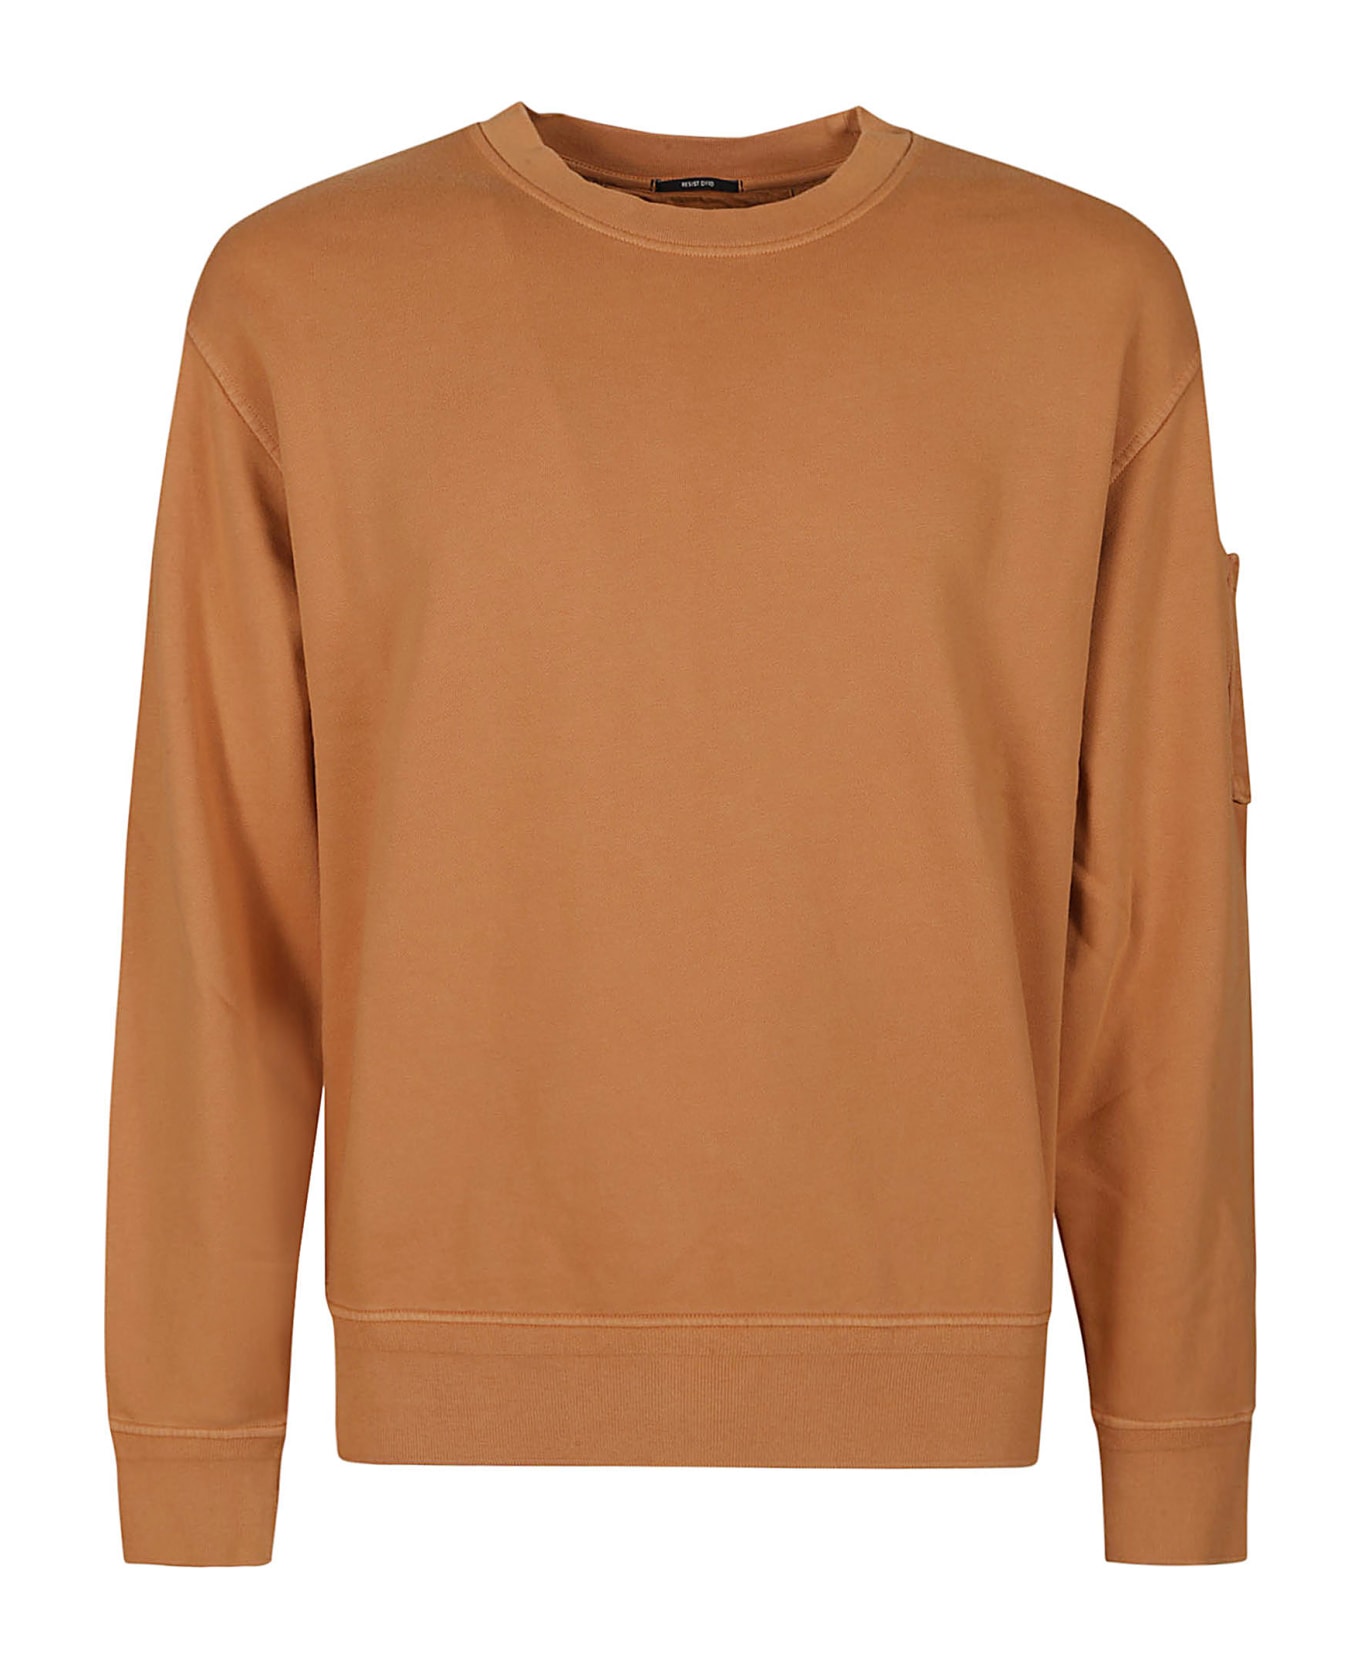 C.P. Company Diagonal Fleece Sweatshirt - PASTRY SHELL フリース